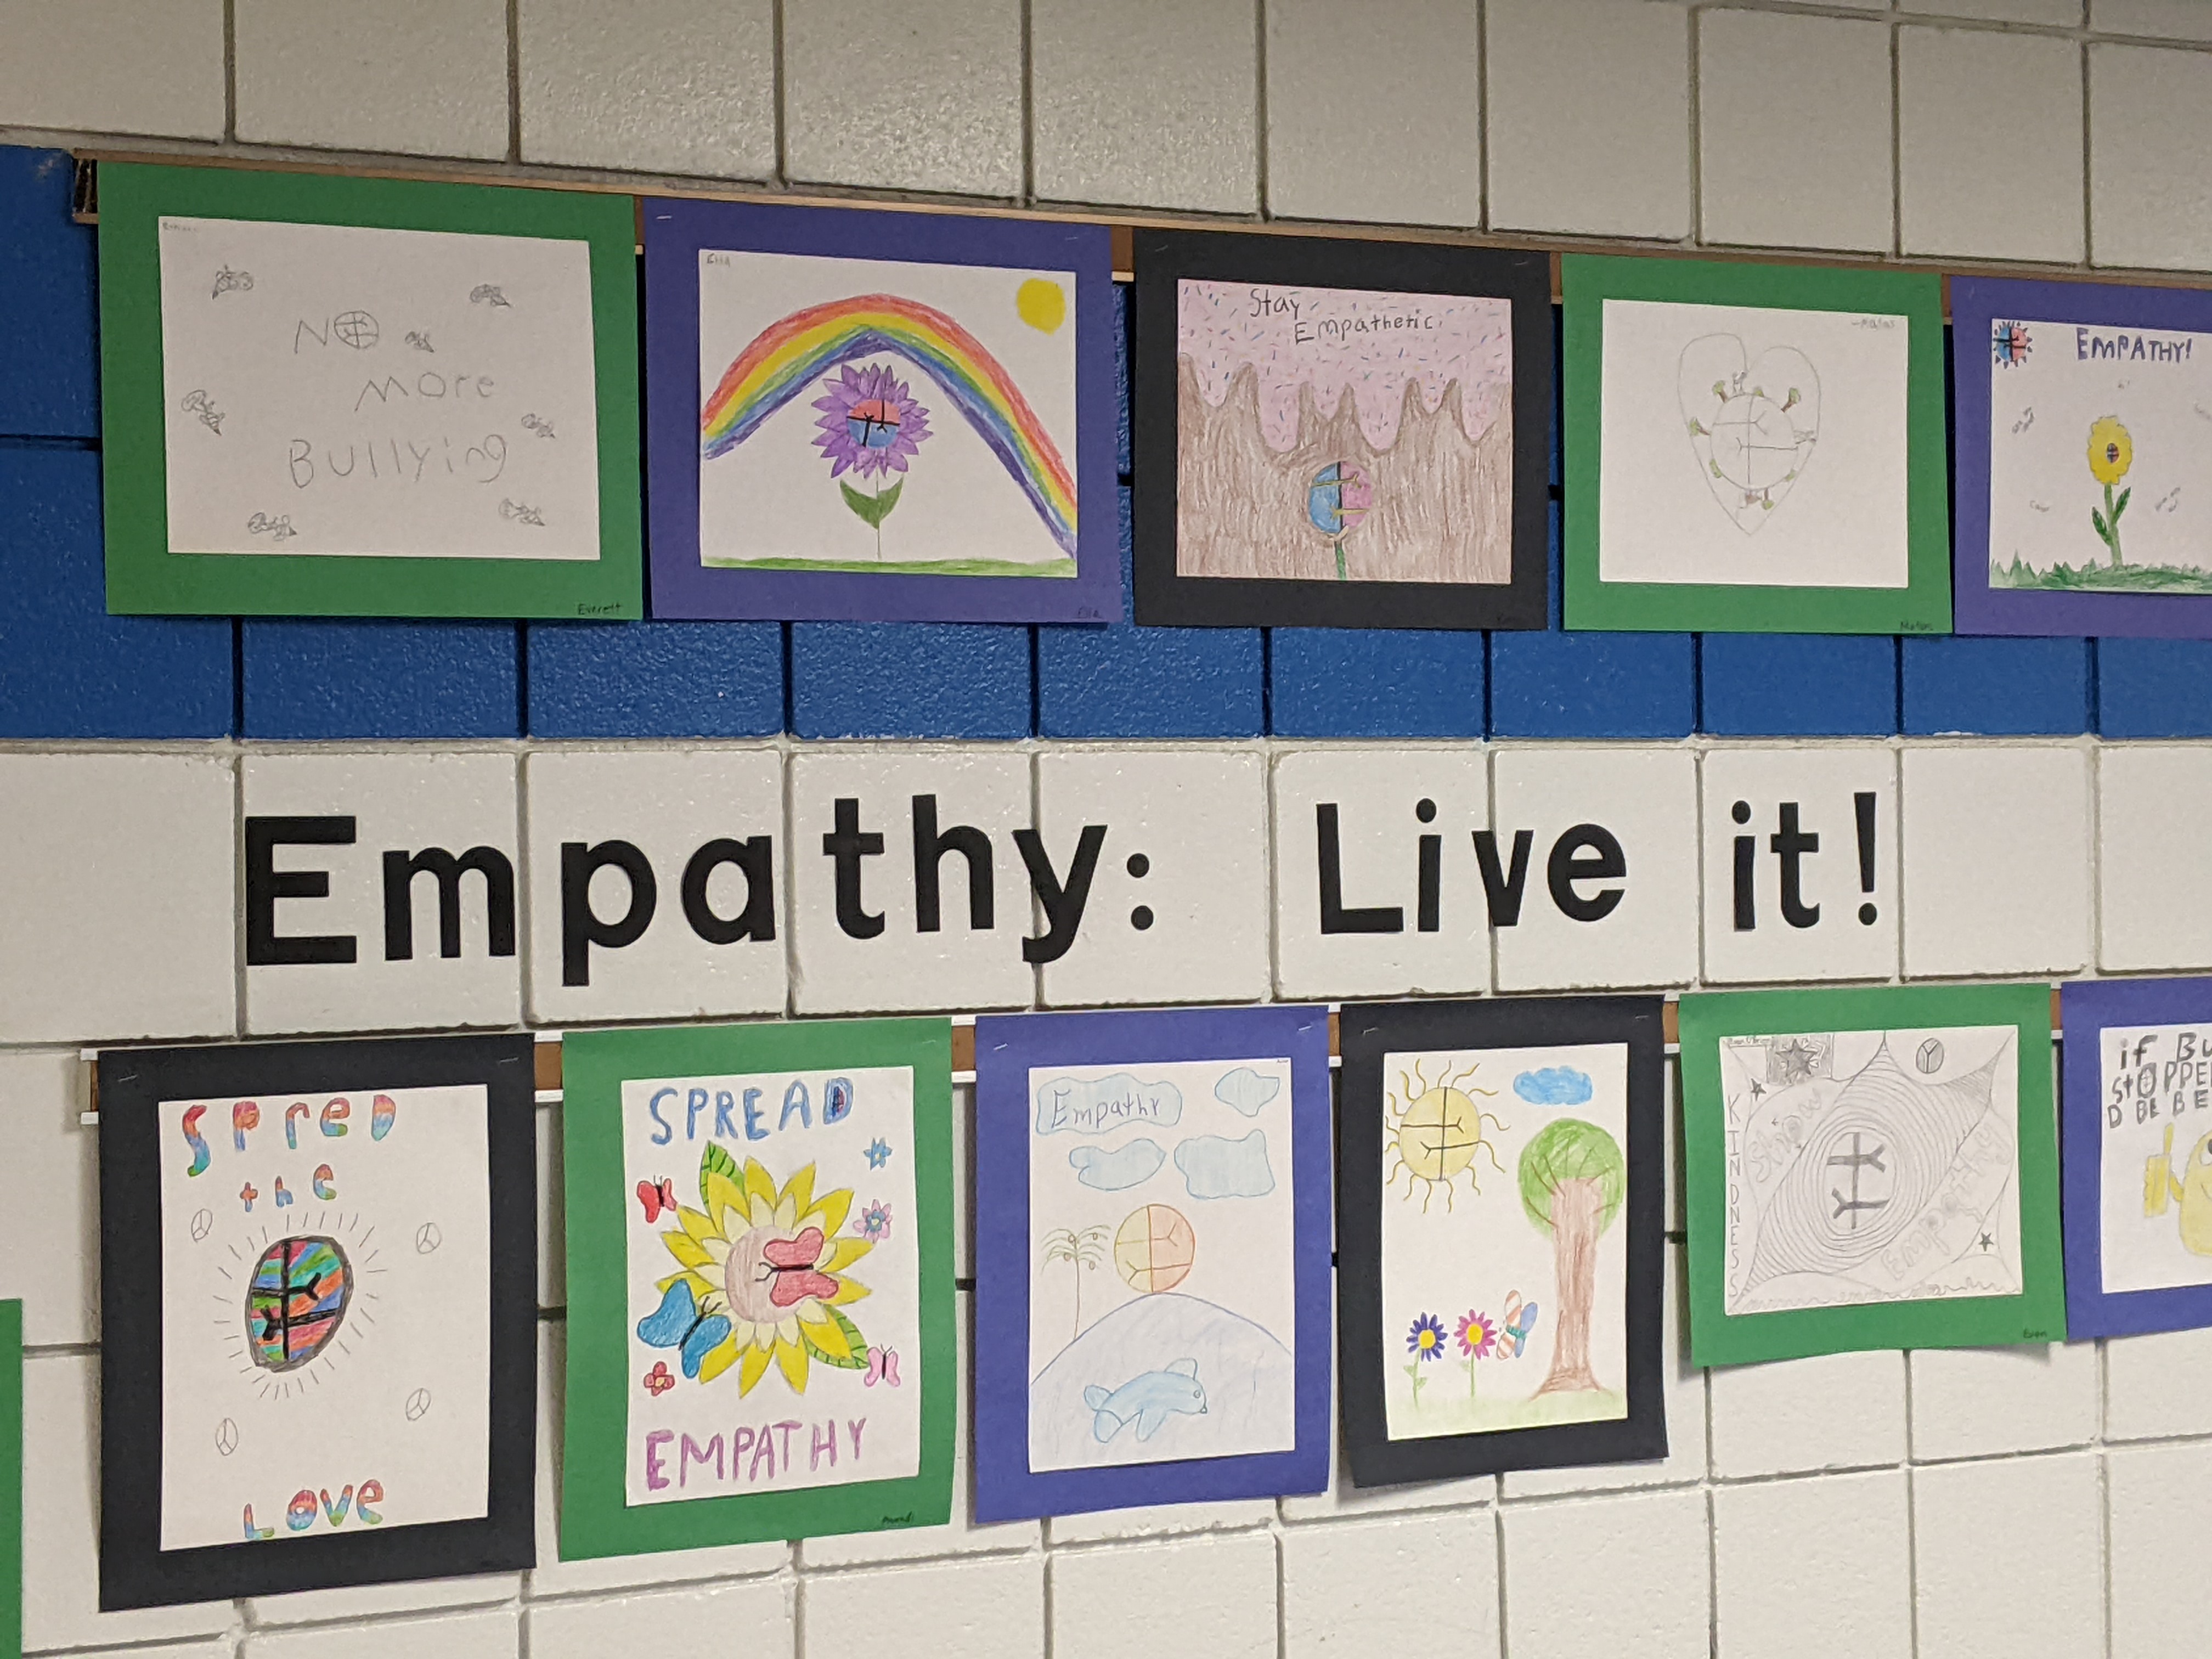 Empathy Definition Poster Wall Art Empathy Definition Feelings 